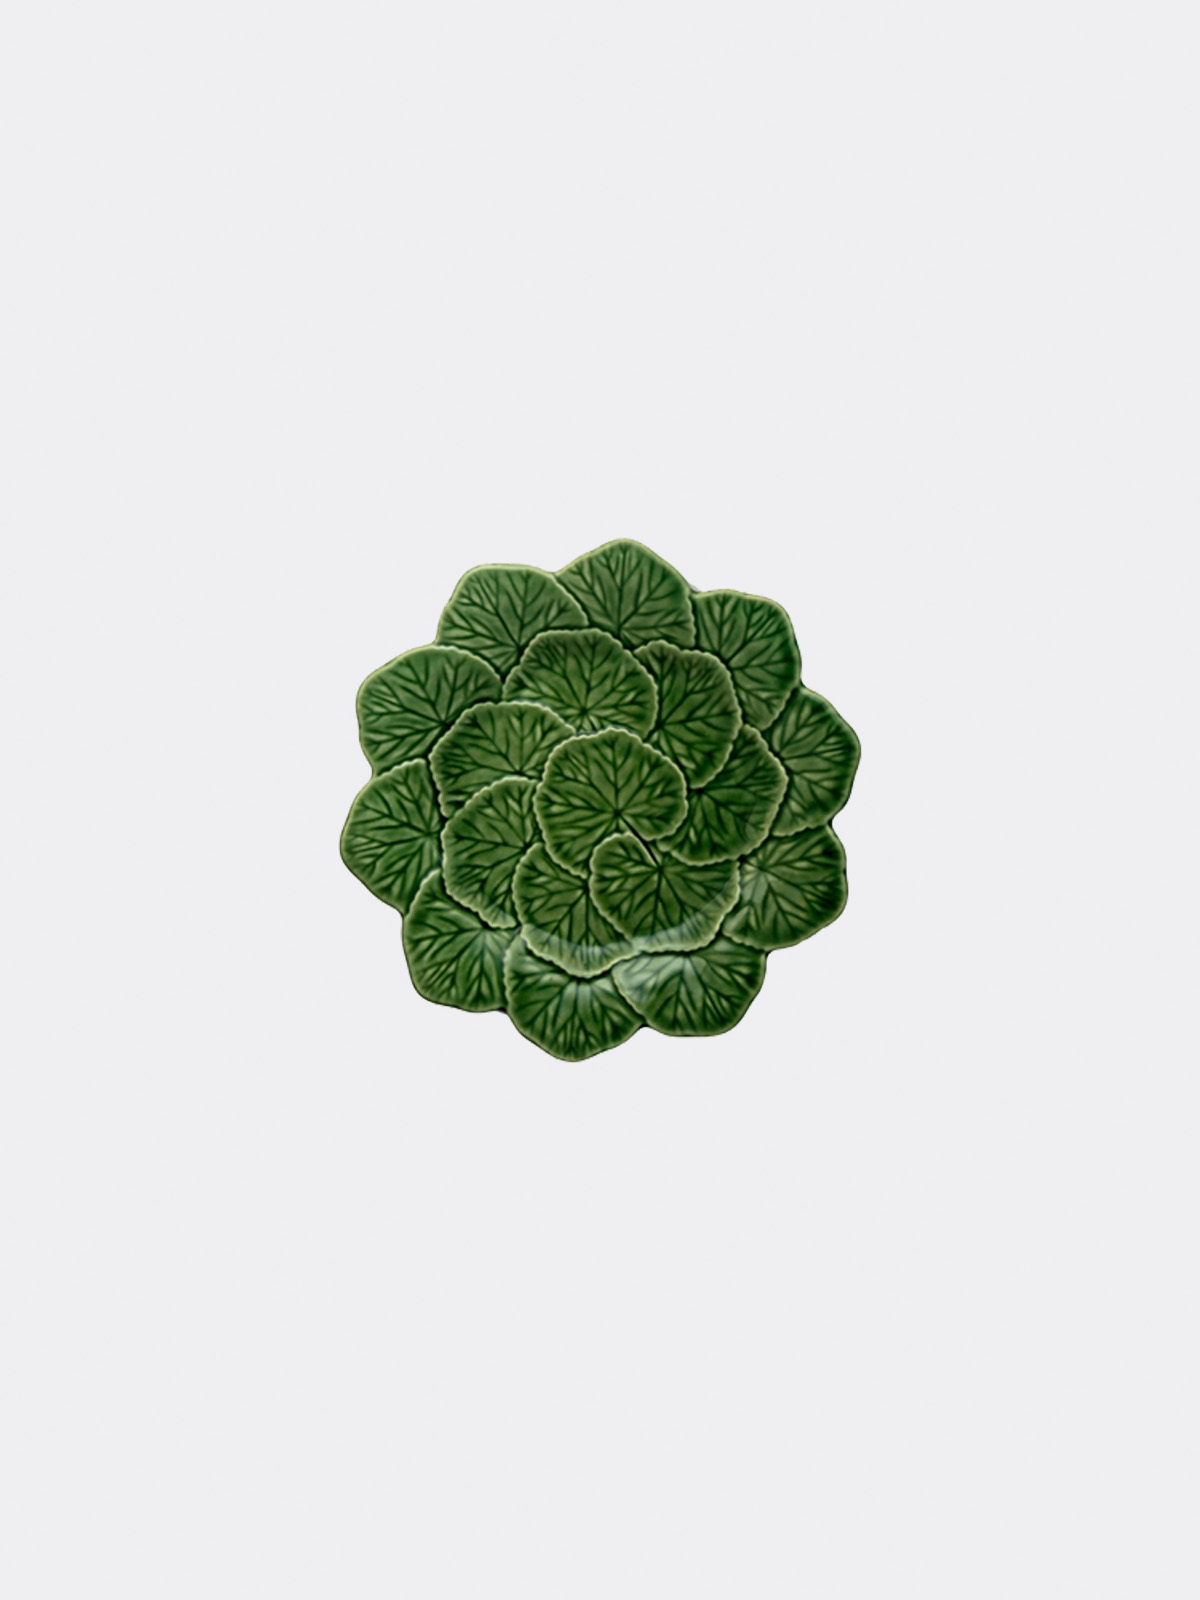 Bordallo Pinheiro Exotic Green Geranium Leafs Small Fruit Plate